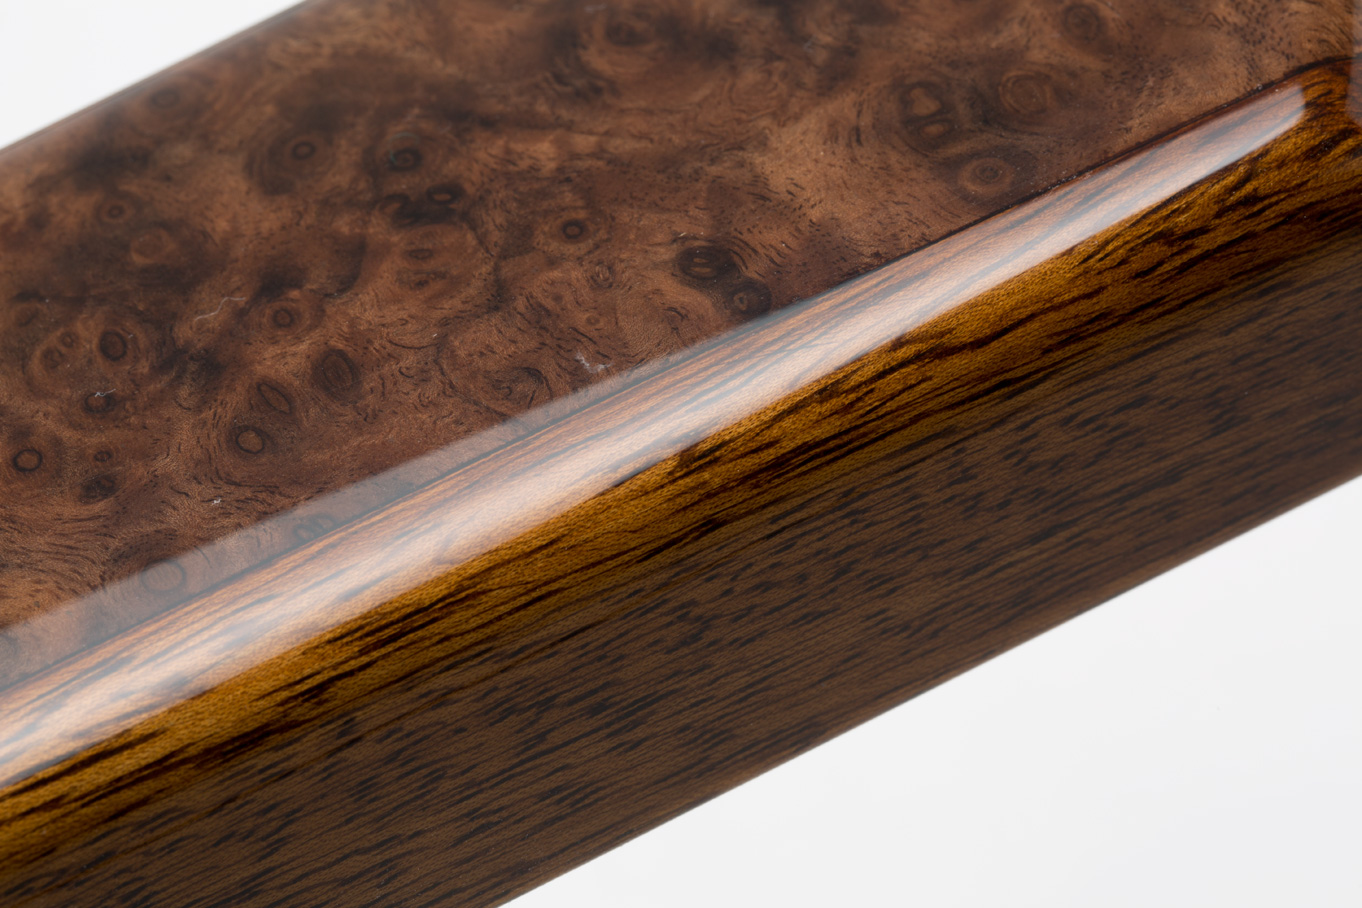 Holz-Armaturenbrett
Wood dashboard
Tableau de bord en bois